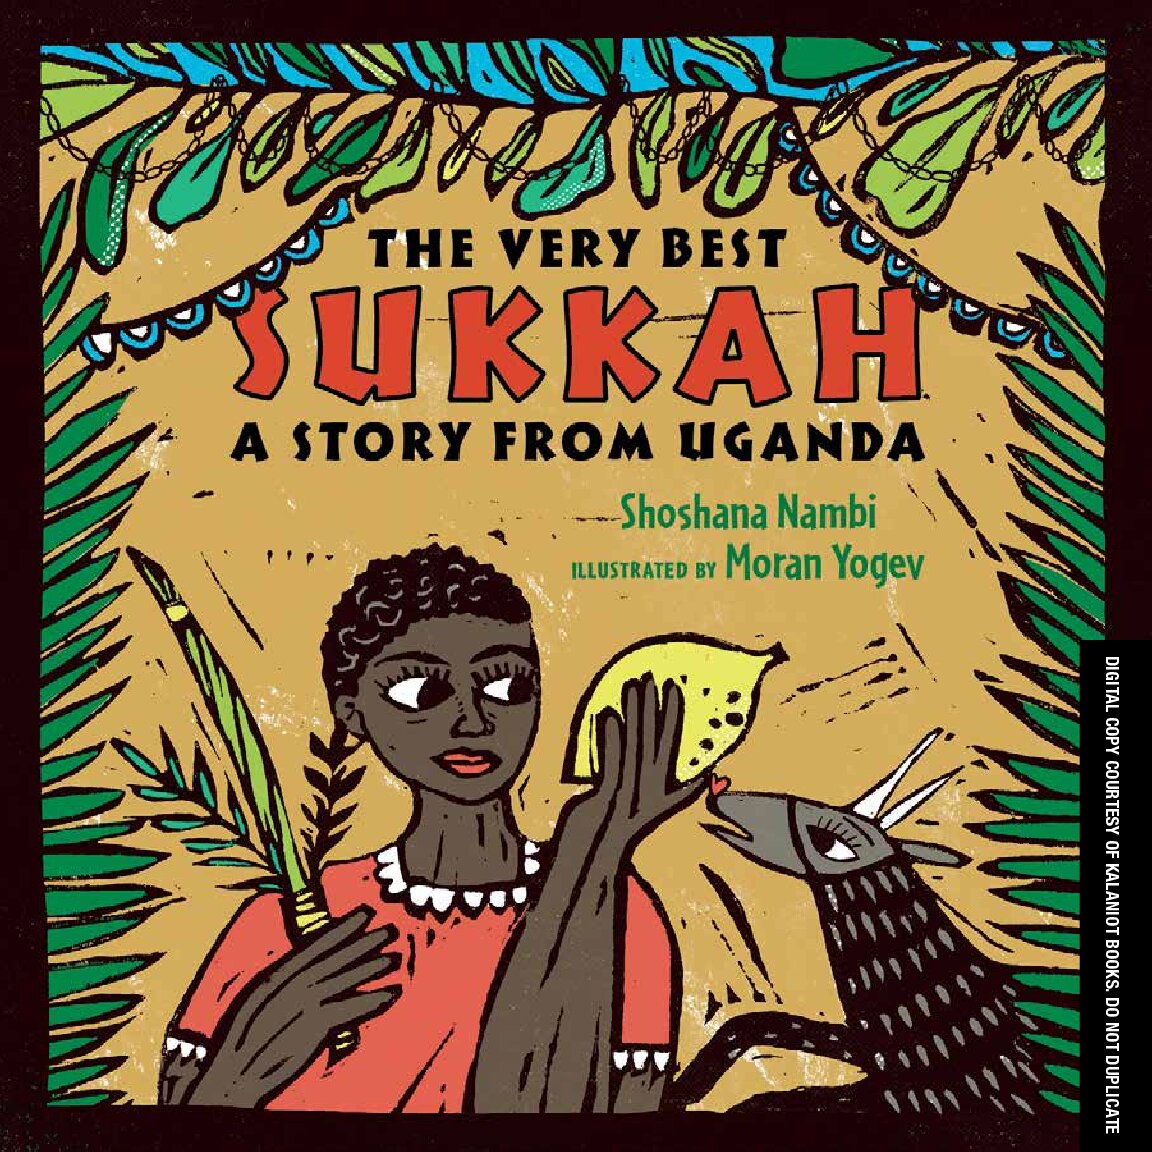 "The Very Best Sukkah: A Story from Uganda" by Shoshana Nambi tells of the Abayudaya community's celebration of Sukkot.